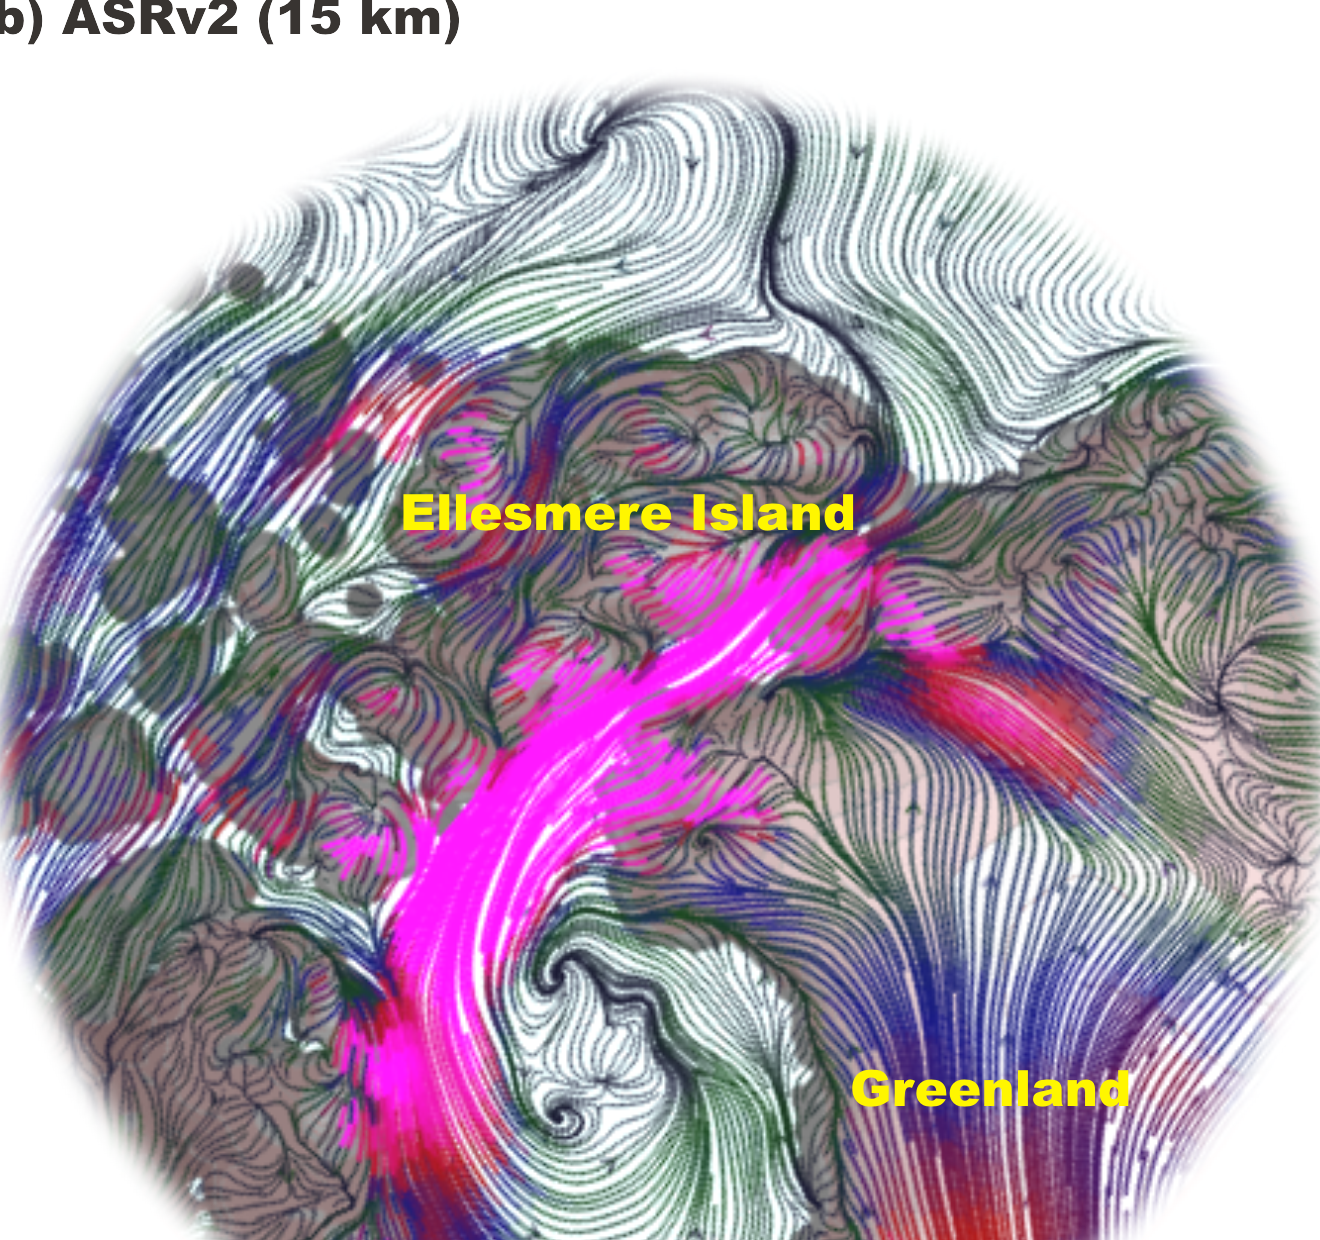 Arctic System Reanalysis (ASR)